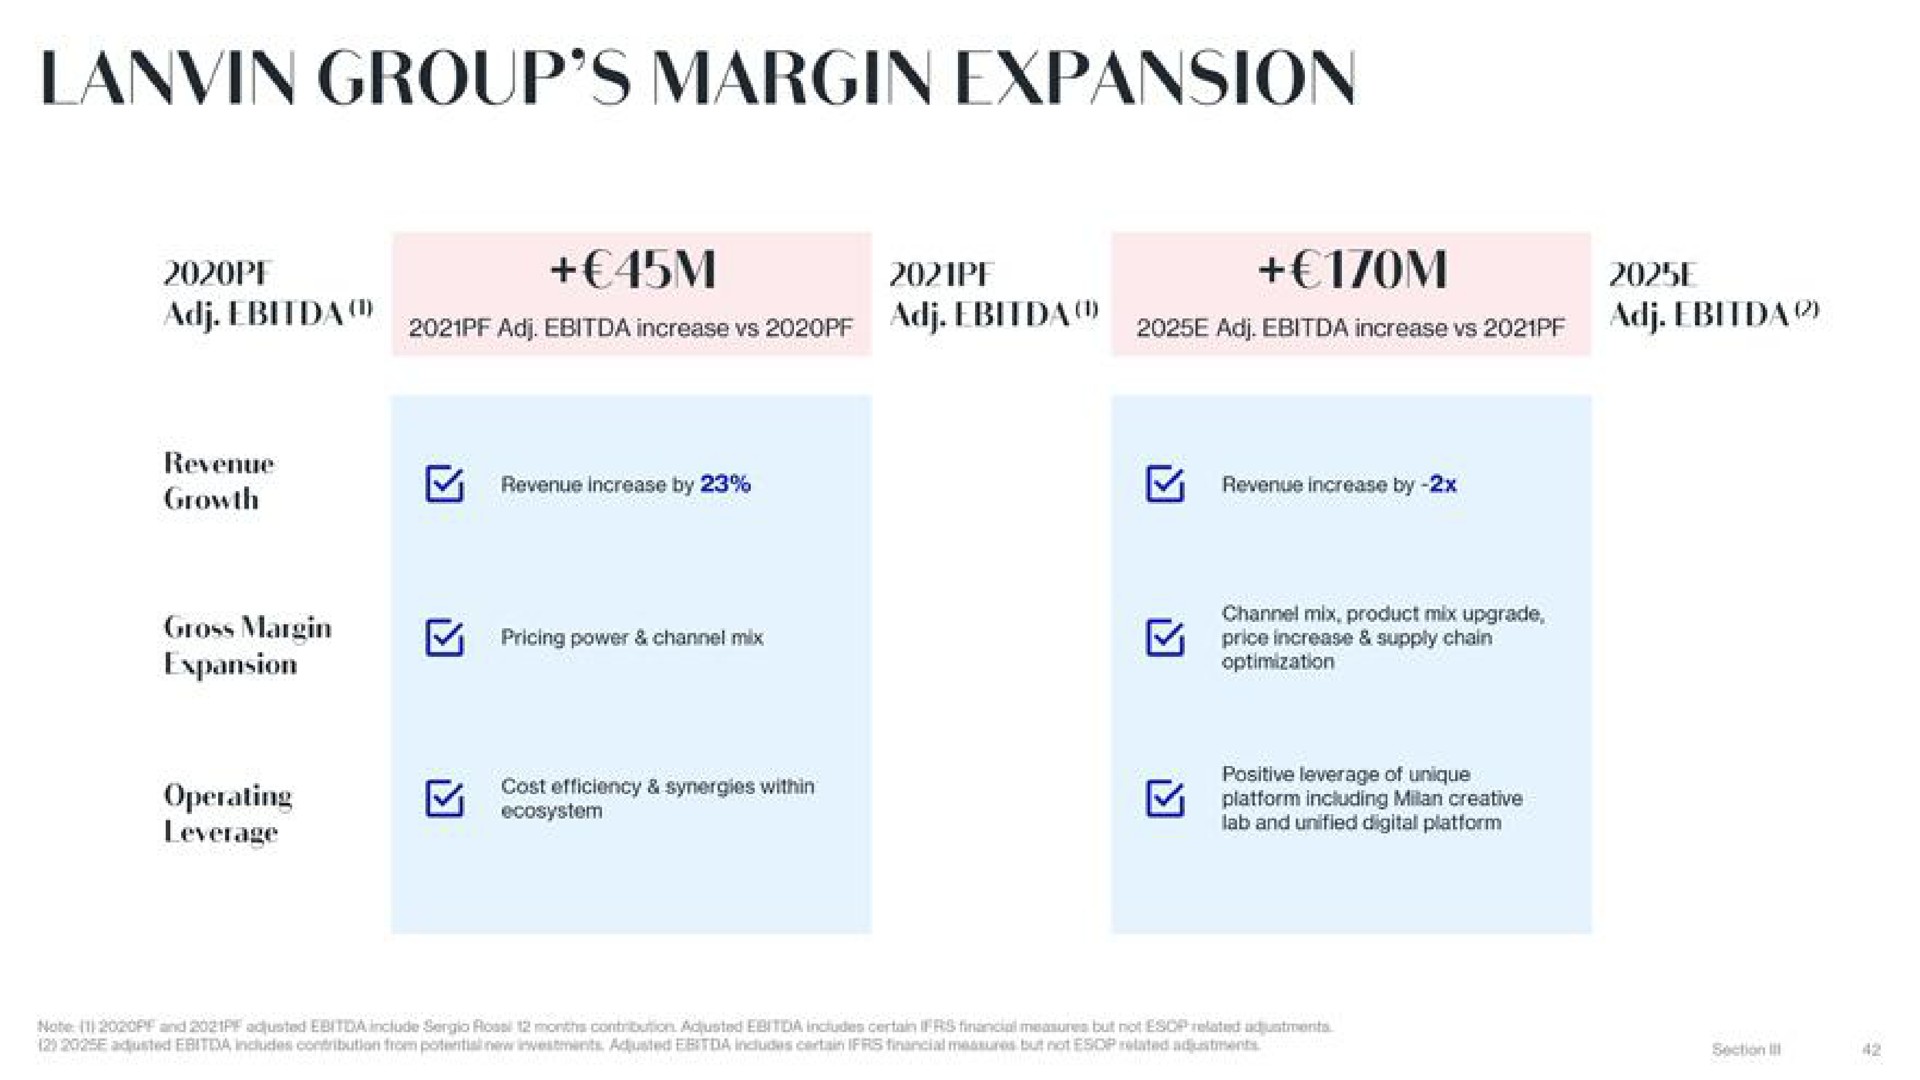 group margin expansion | Lanvin